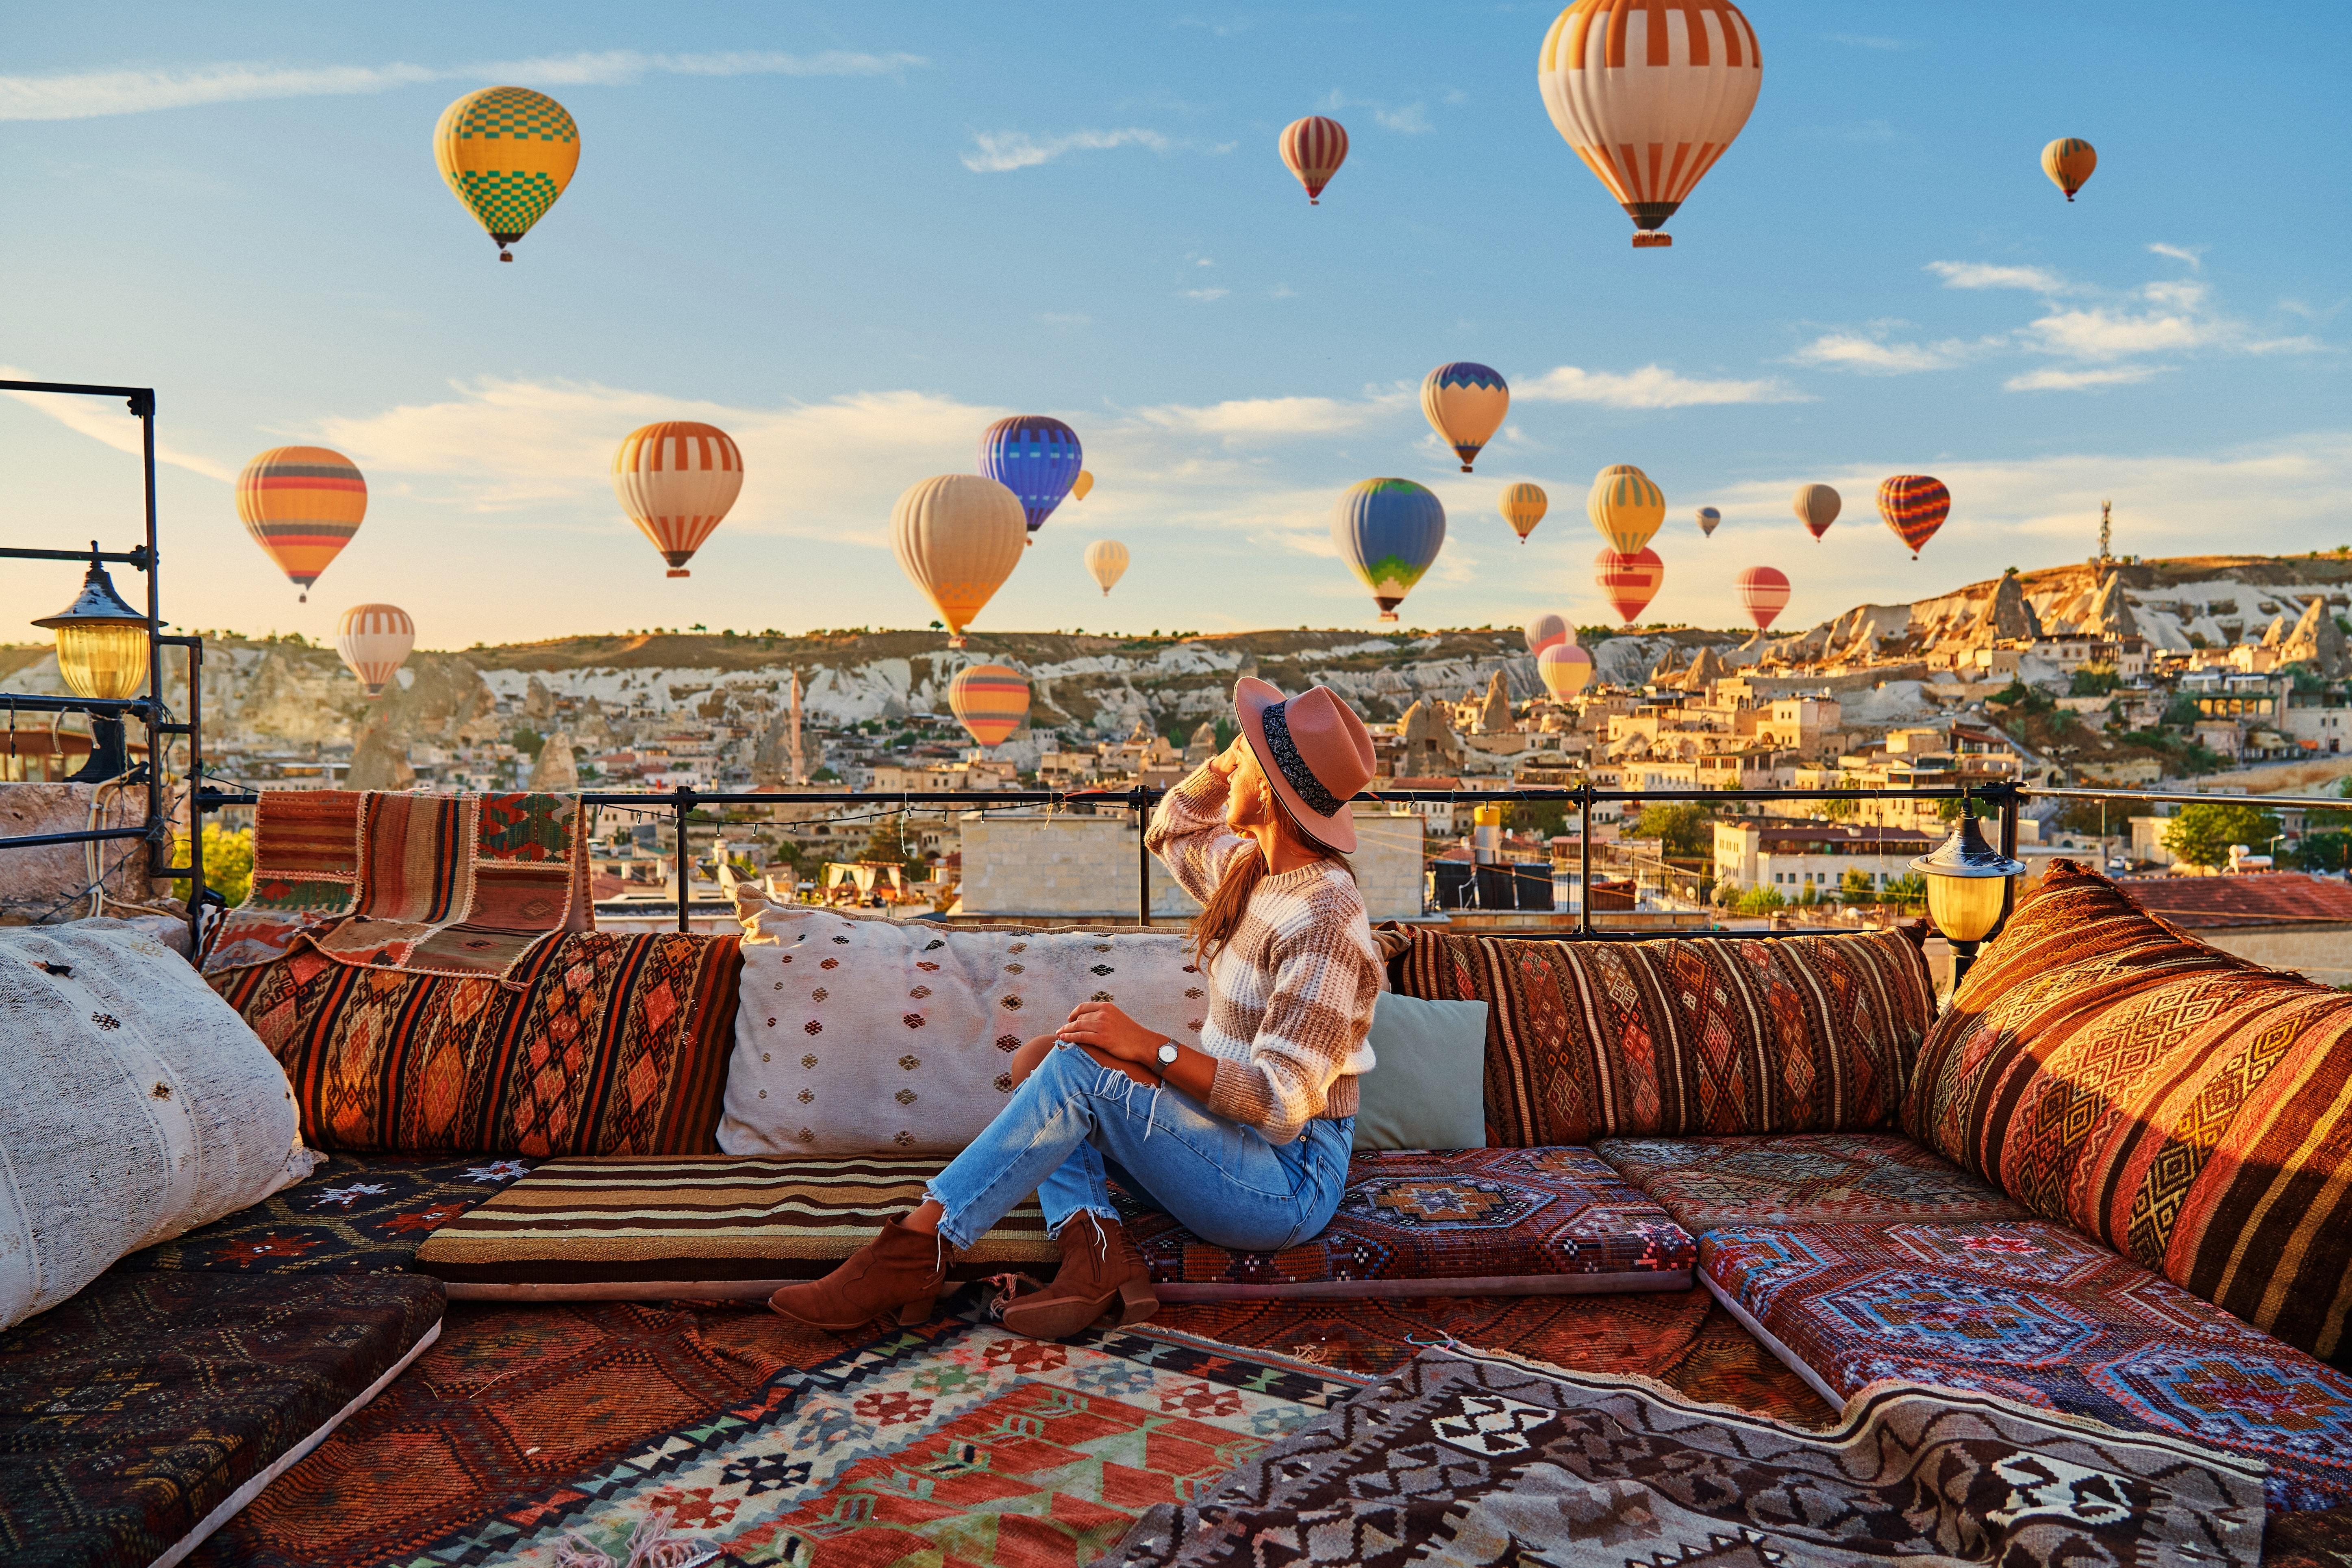 Tourist enjoying the view in Cappadocia